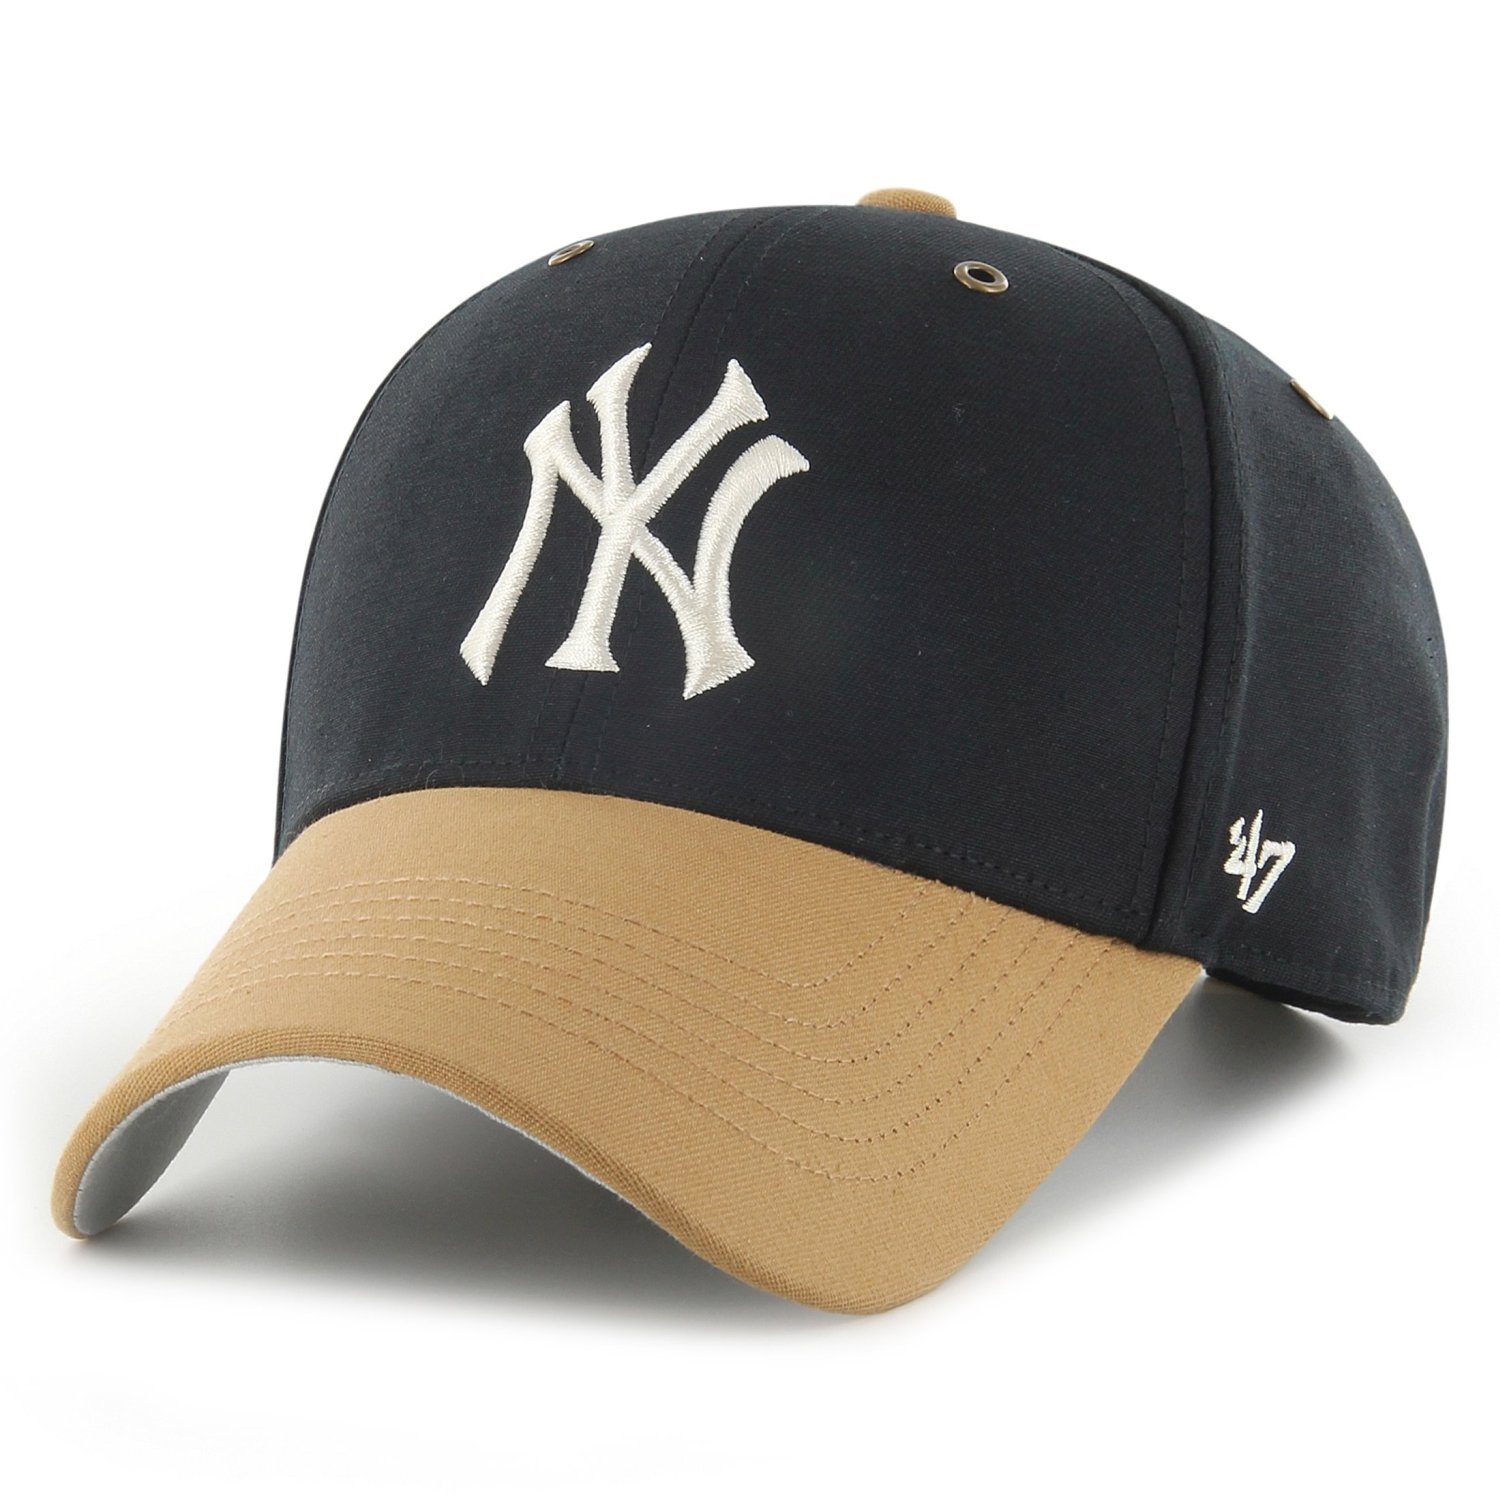 Brand CAMPUS '47 Baseball Cap New York Yankees